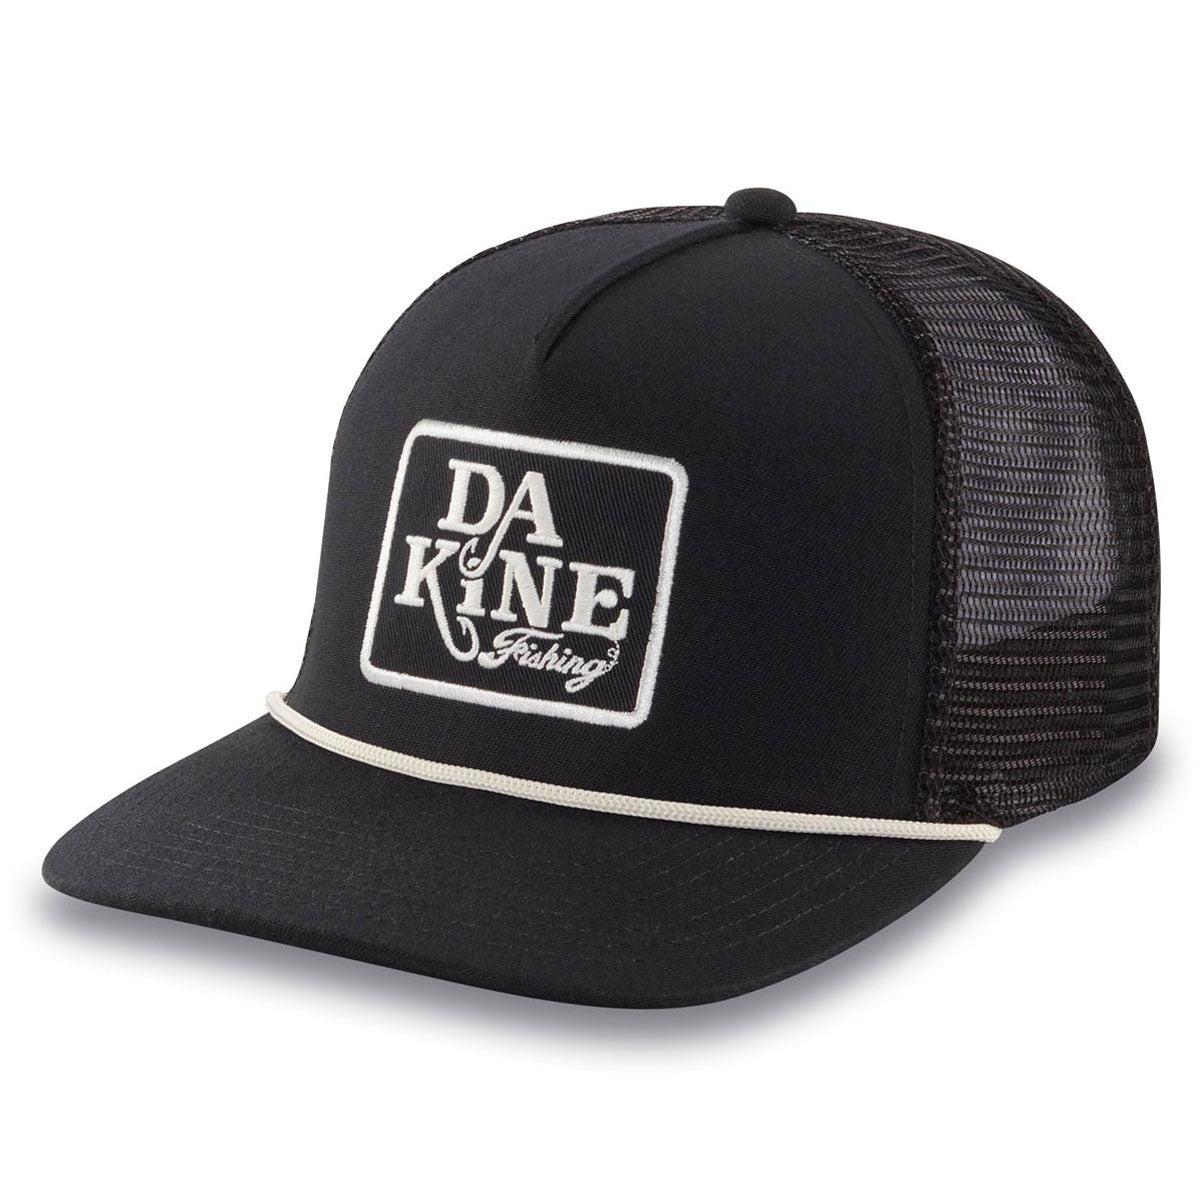 Dakine All Sports Trucker Hat - Black image 1